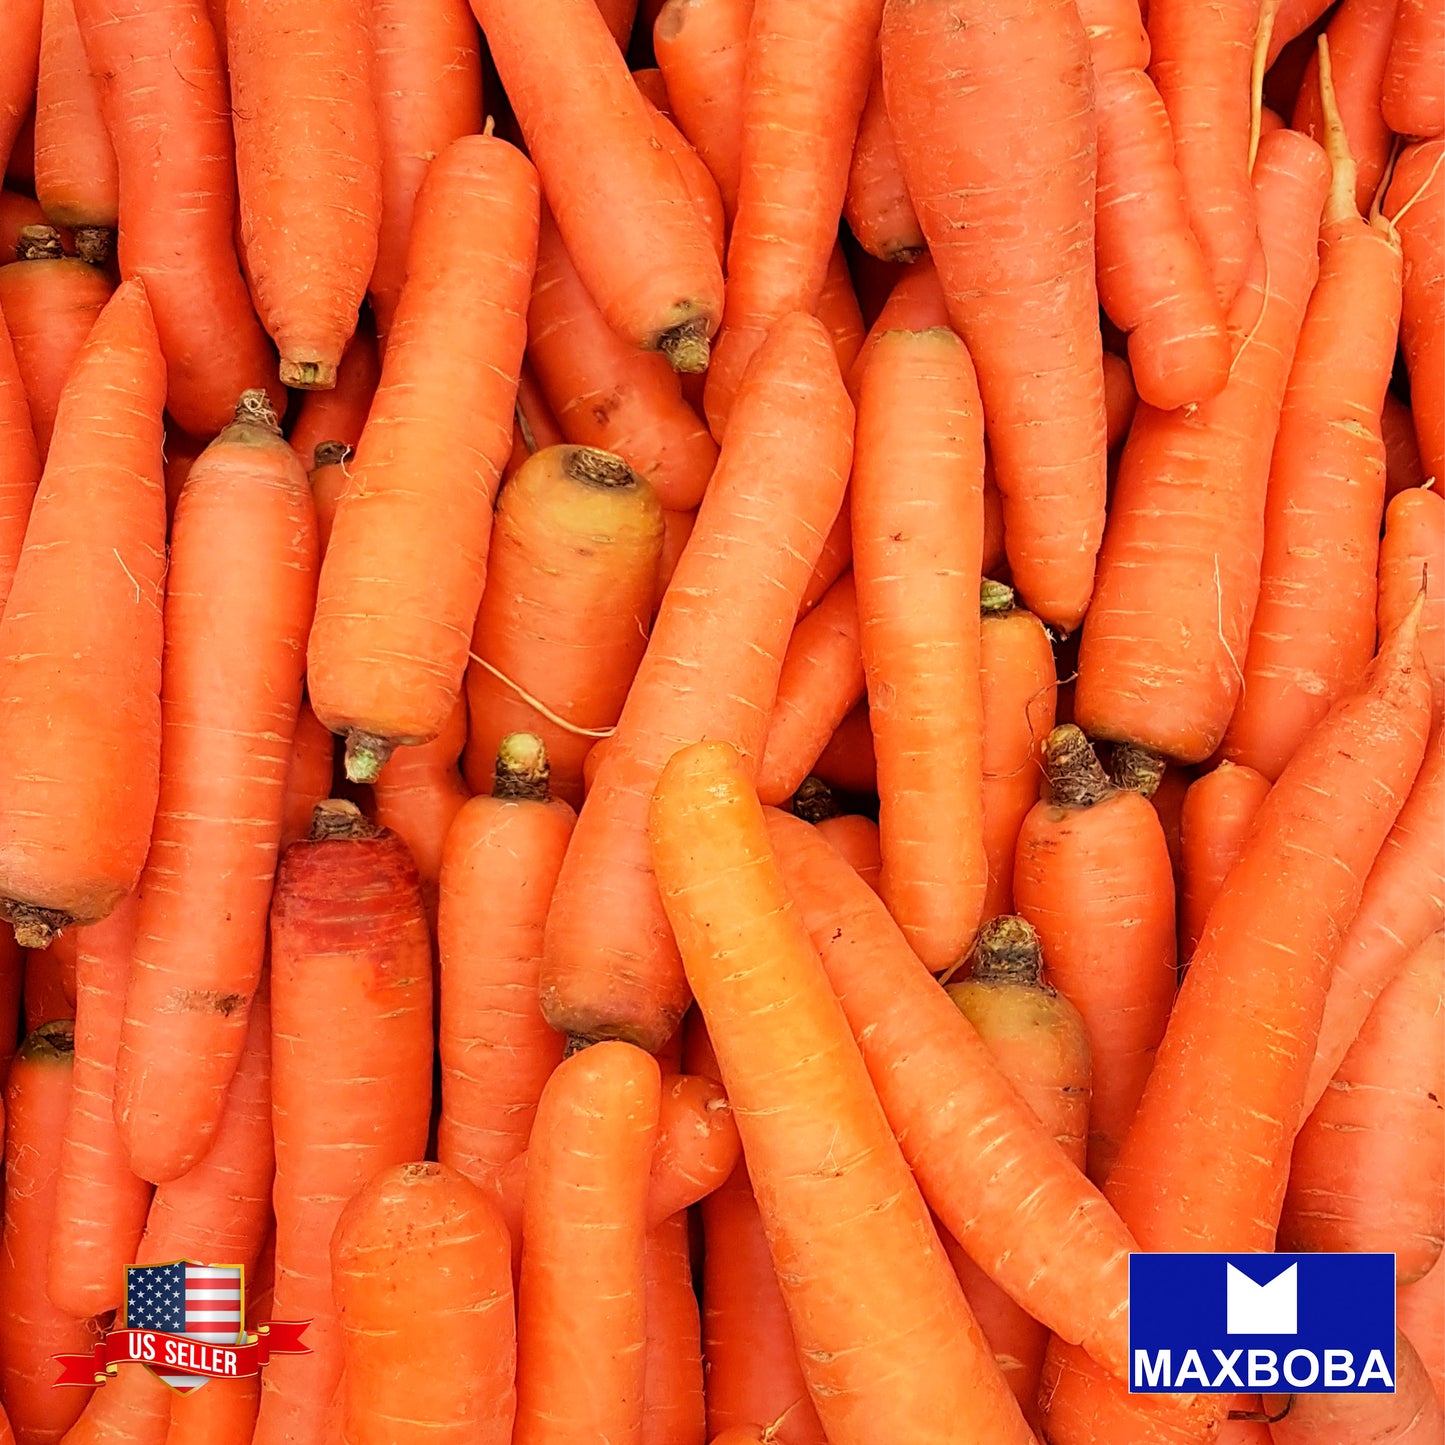 Non-GMO Carrot Seeds - Danvers 126 - Heirloom Vegetable